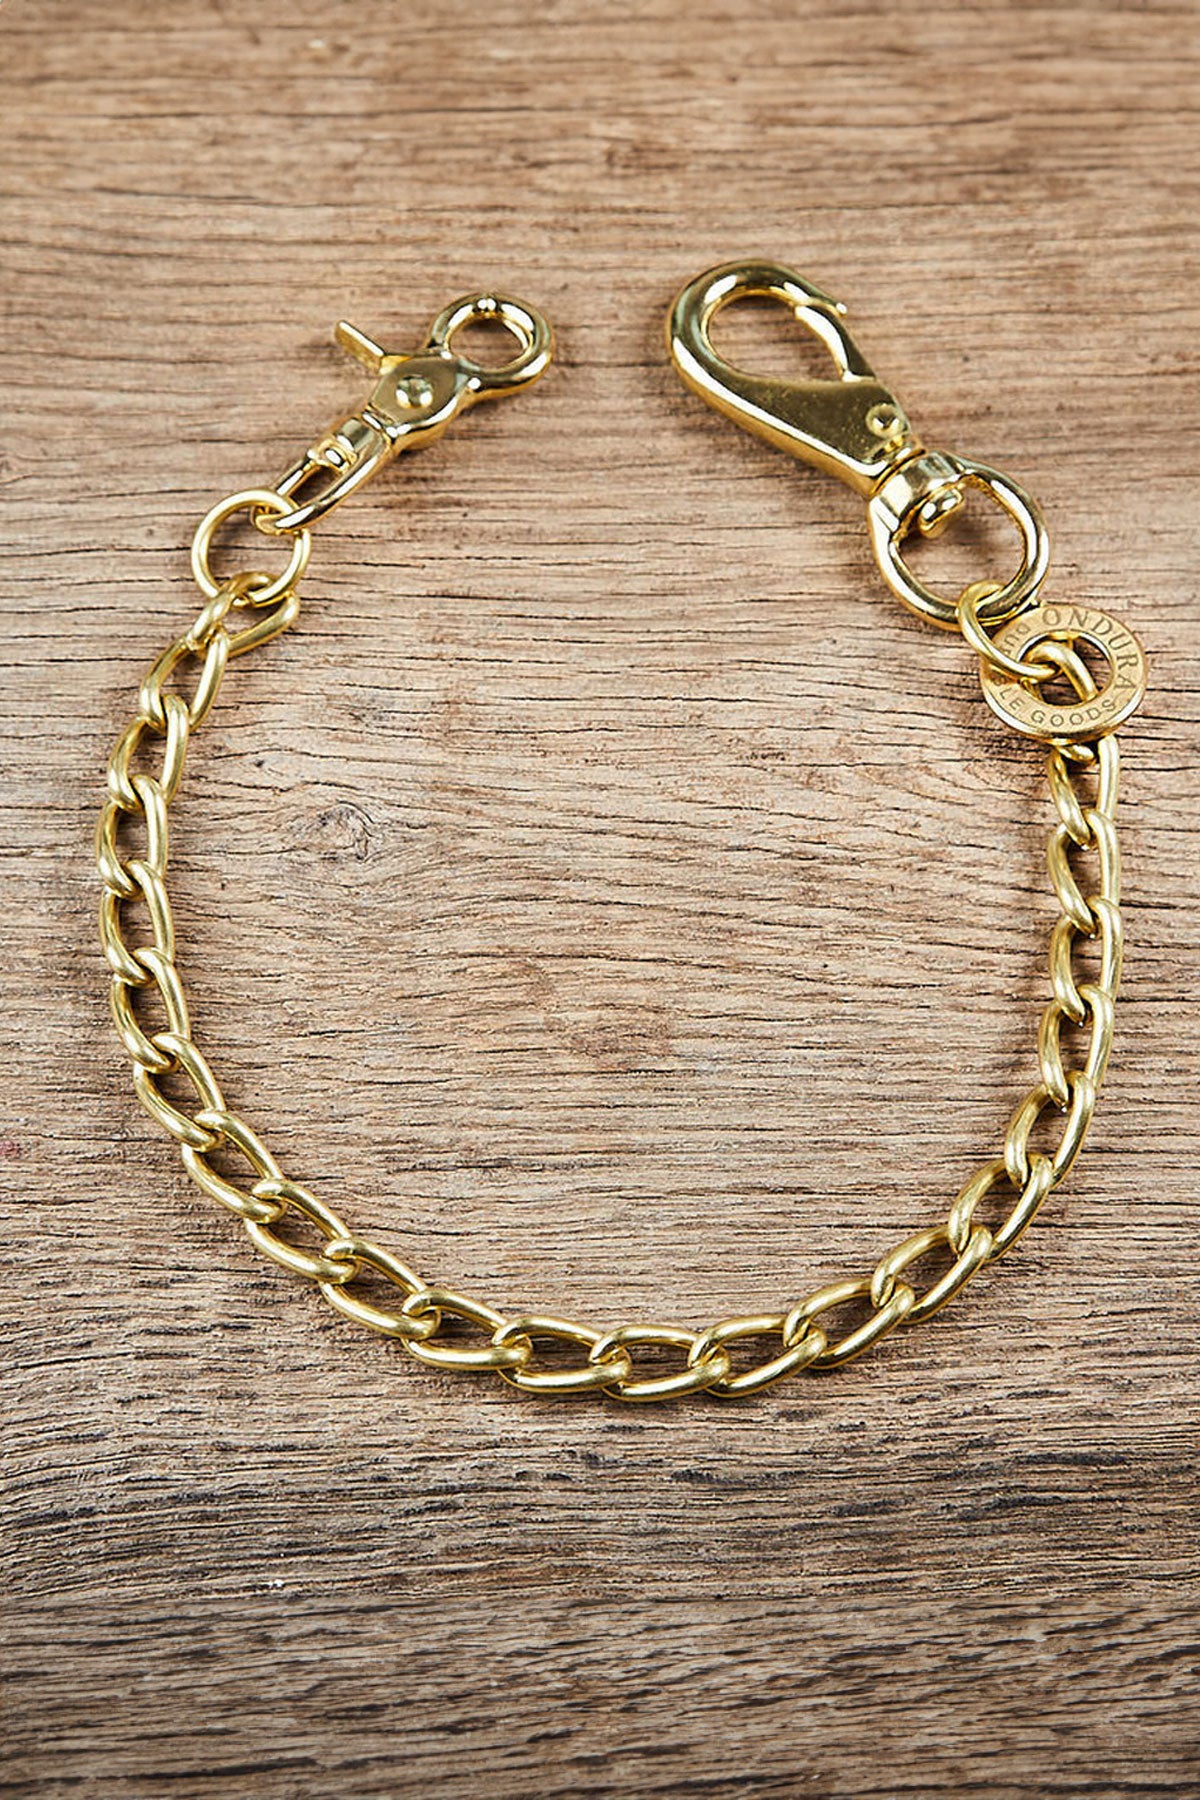 Ondura - Wallet / Key Chain in full solid brass